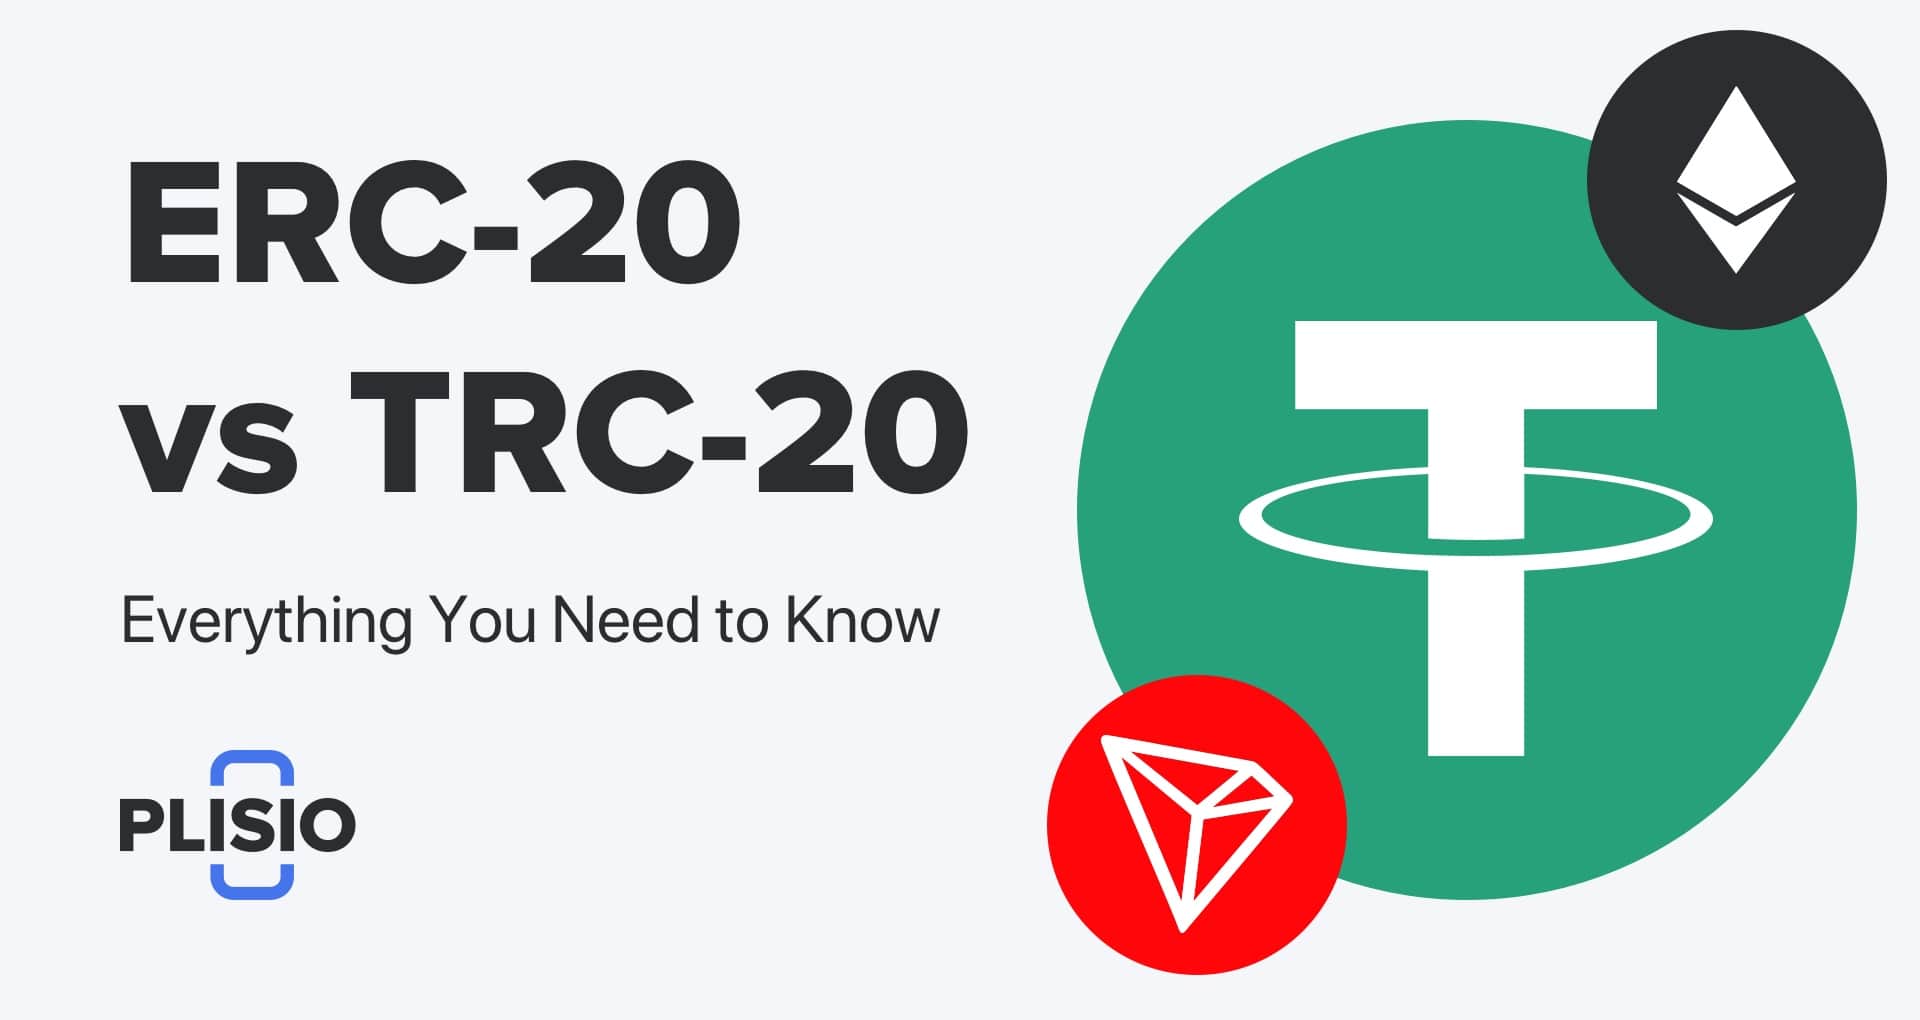 Tether (ERC20) / Market / Totalcoin